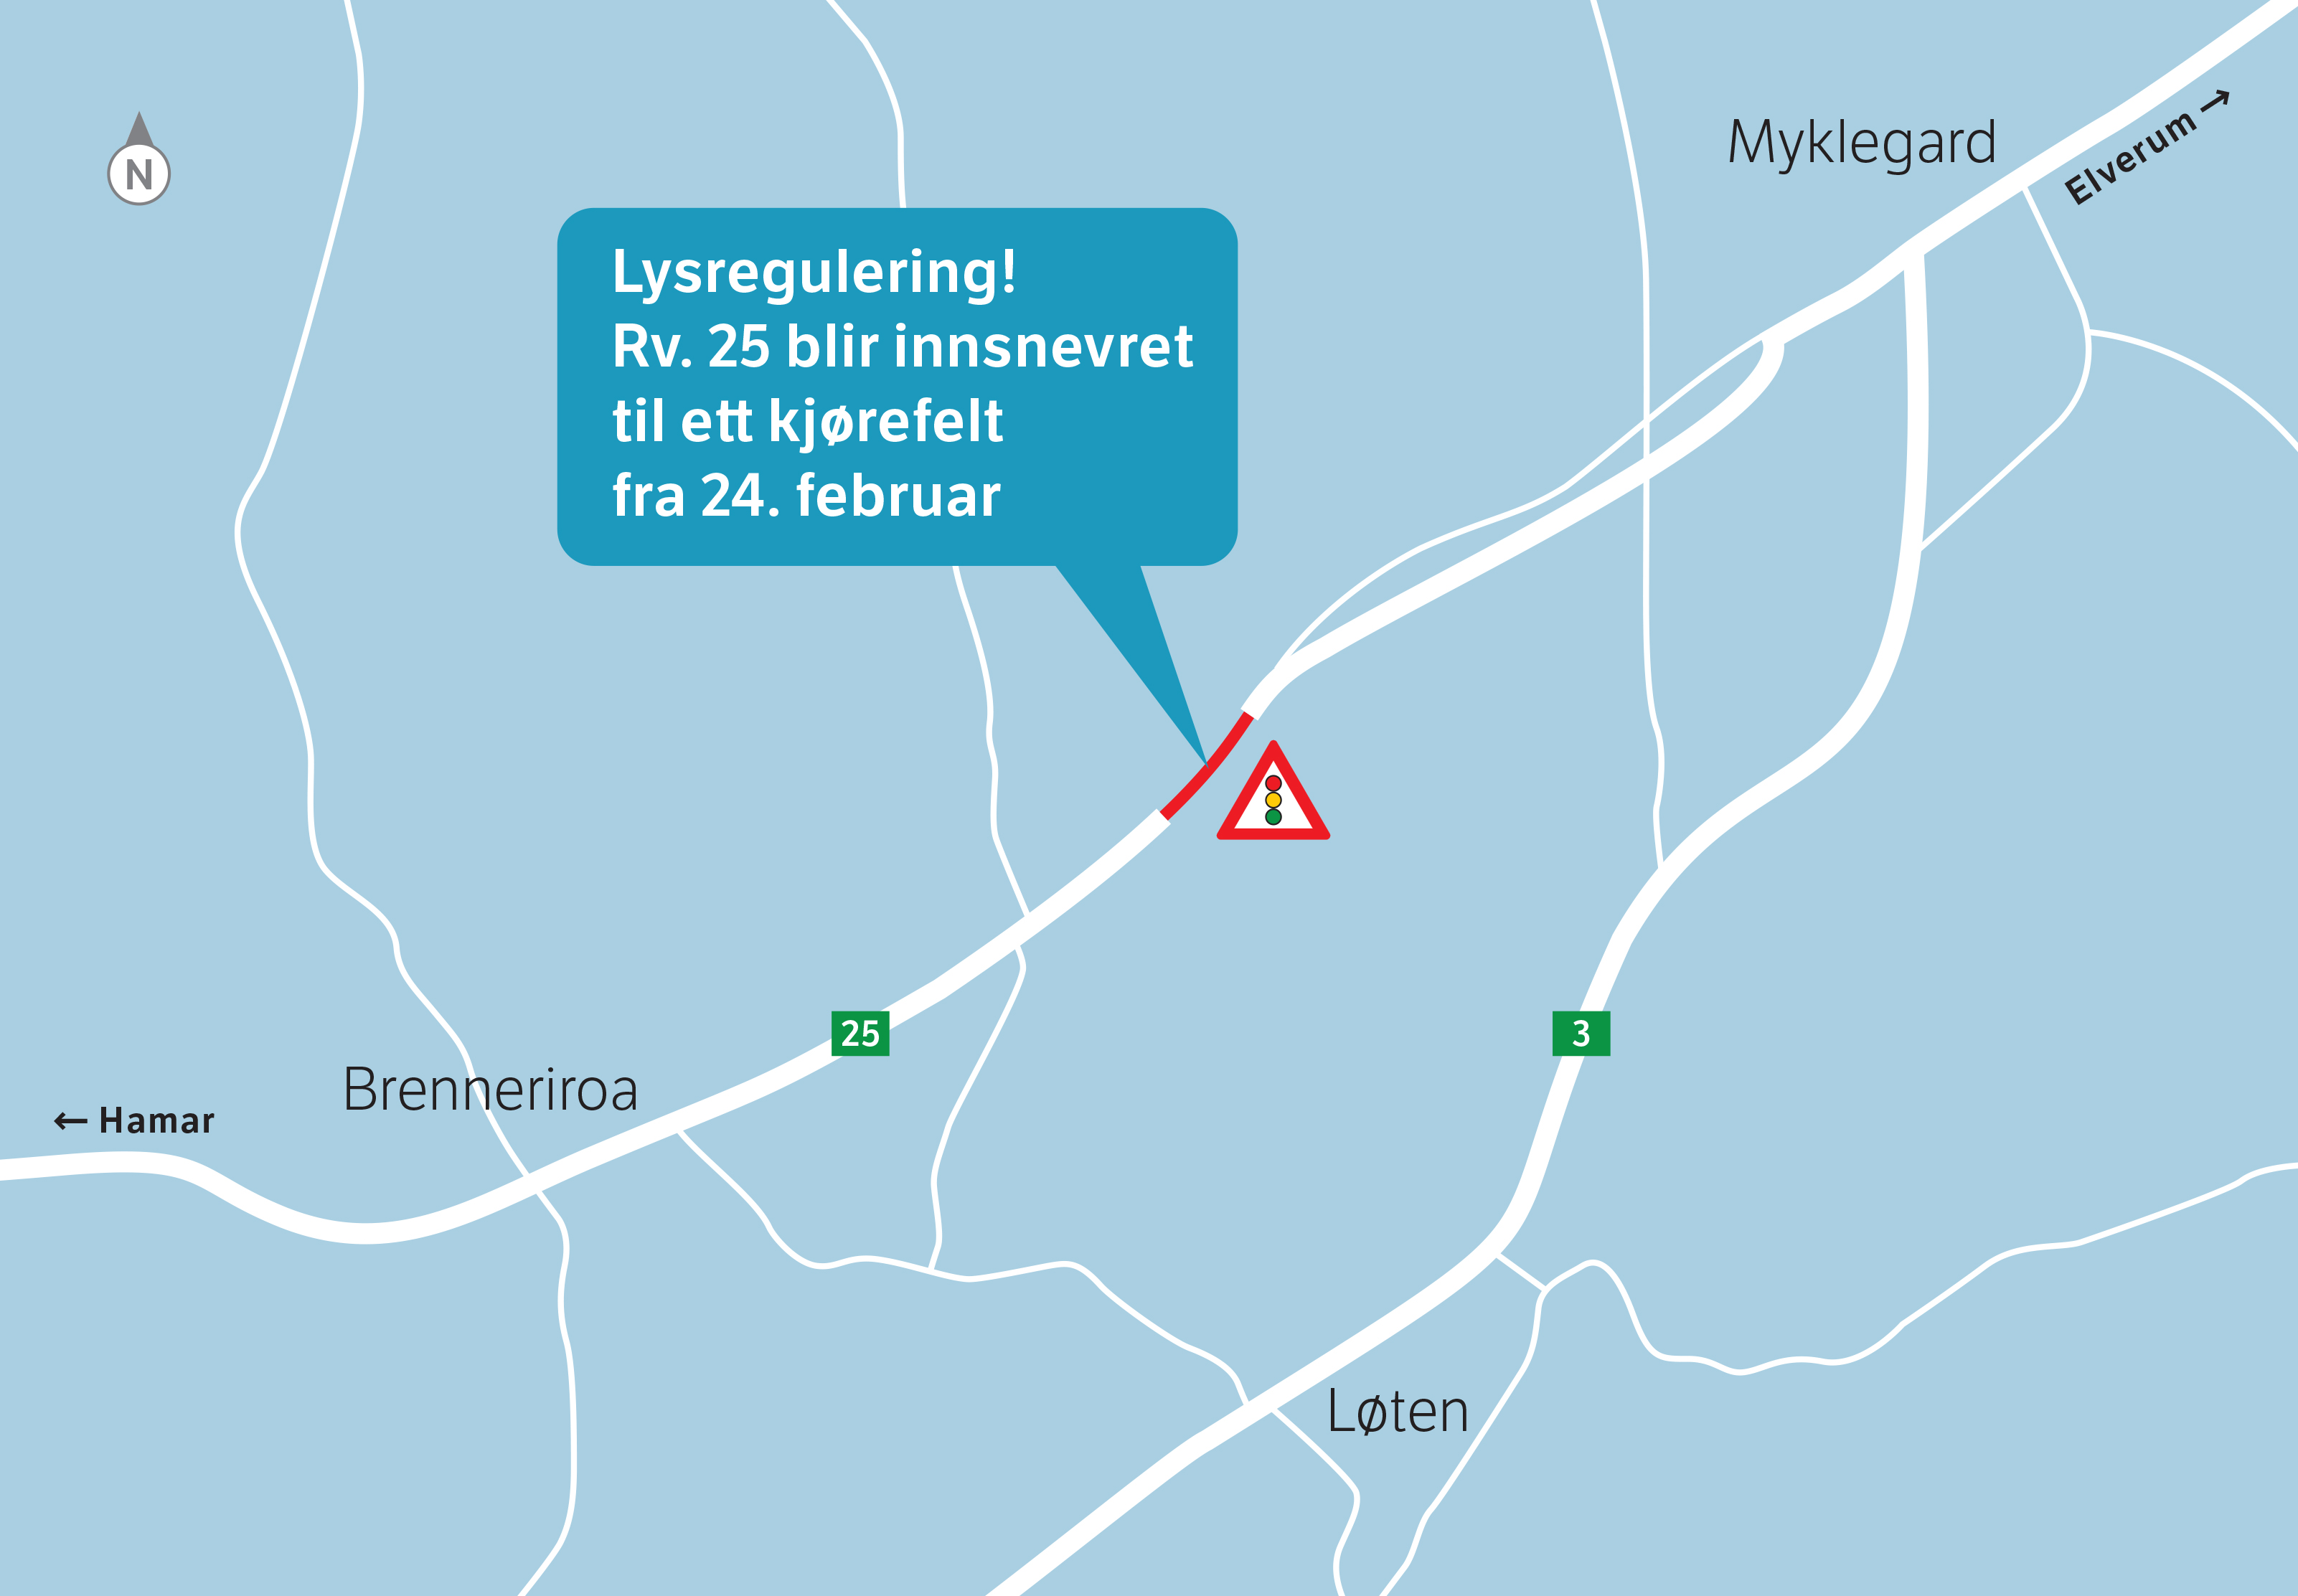 Enveiskjøring og lysregulering på rv. 25 ved Grøholt